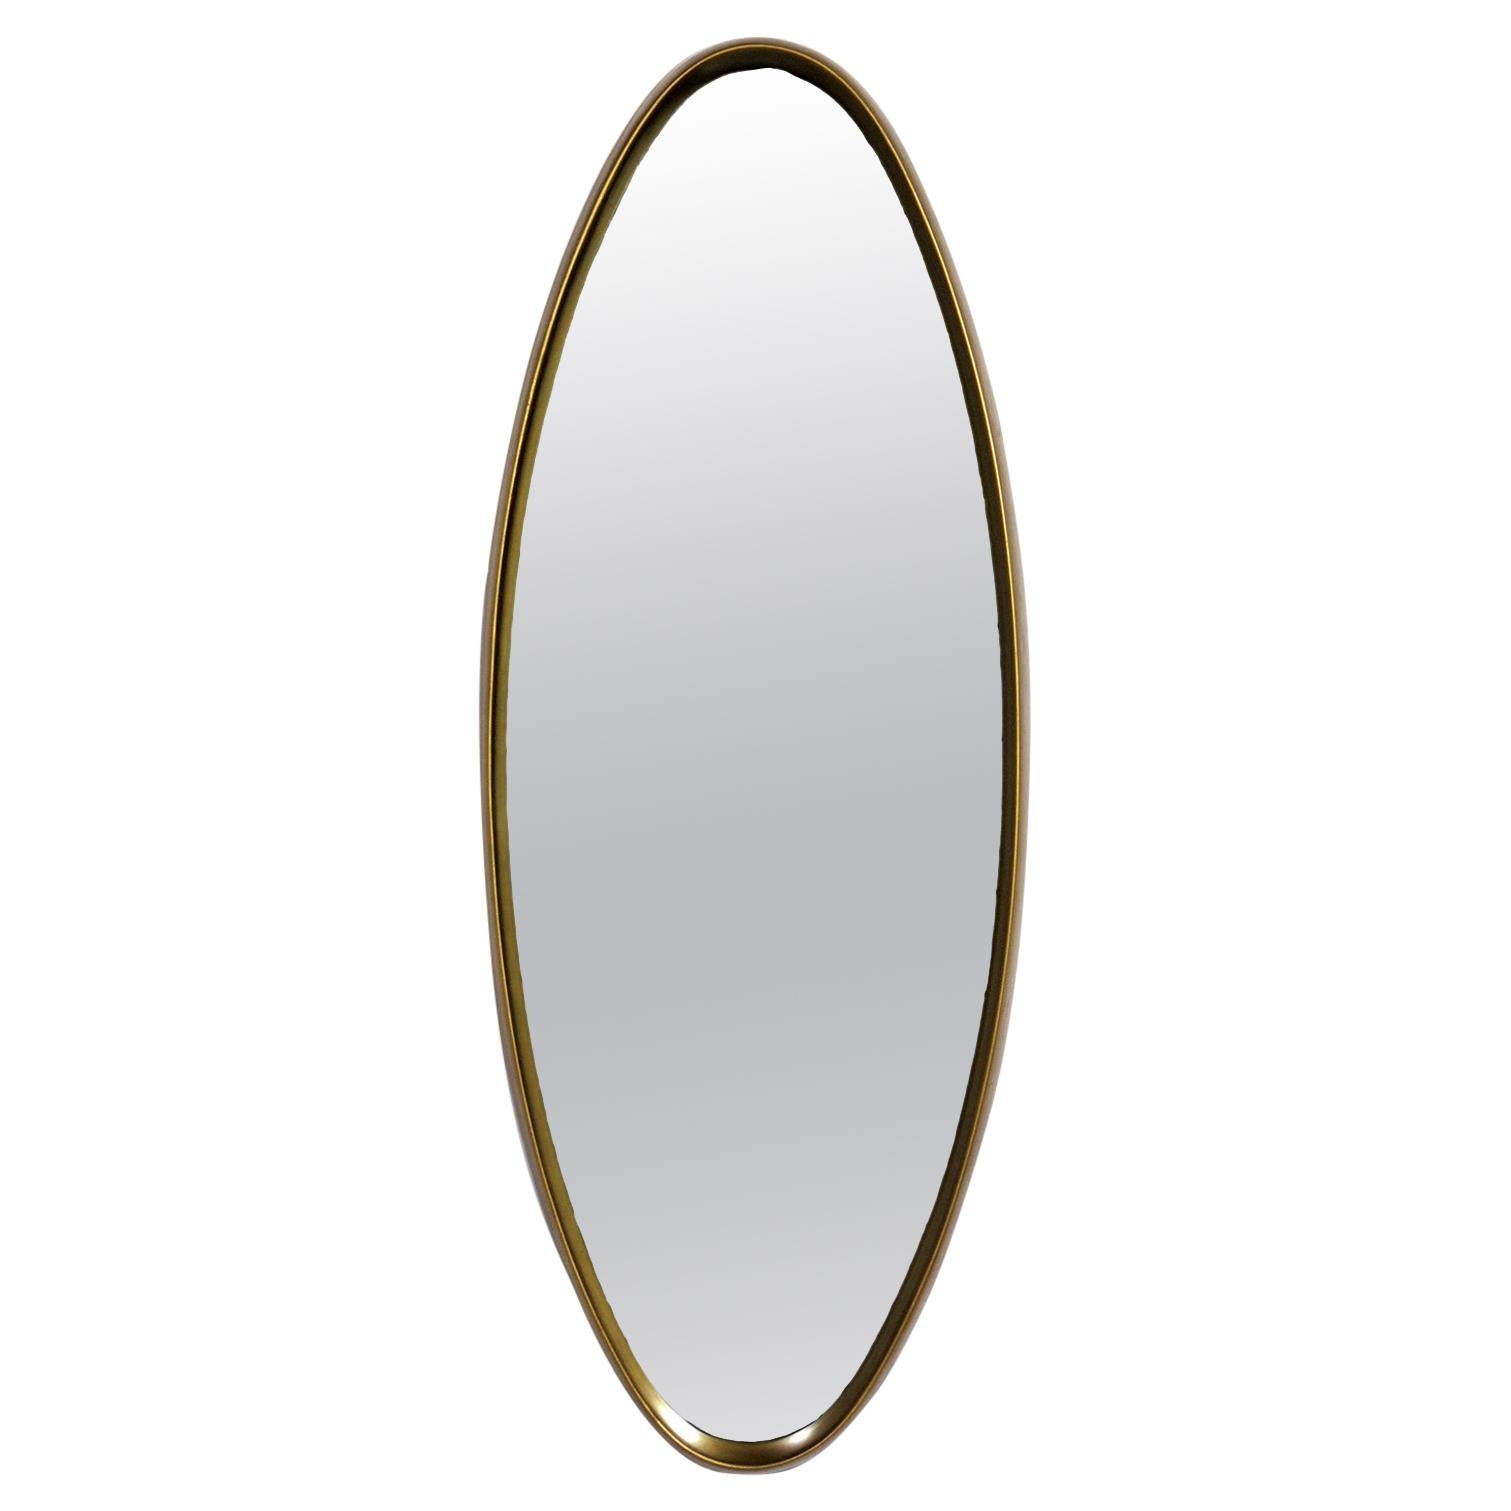 Midcentury Gold Oval Mirror